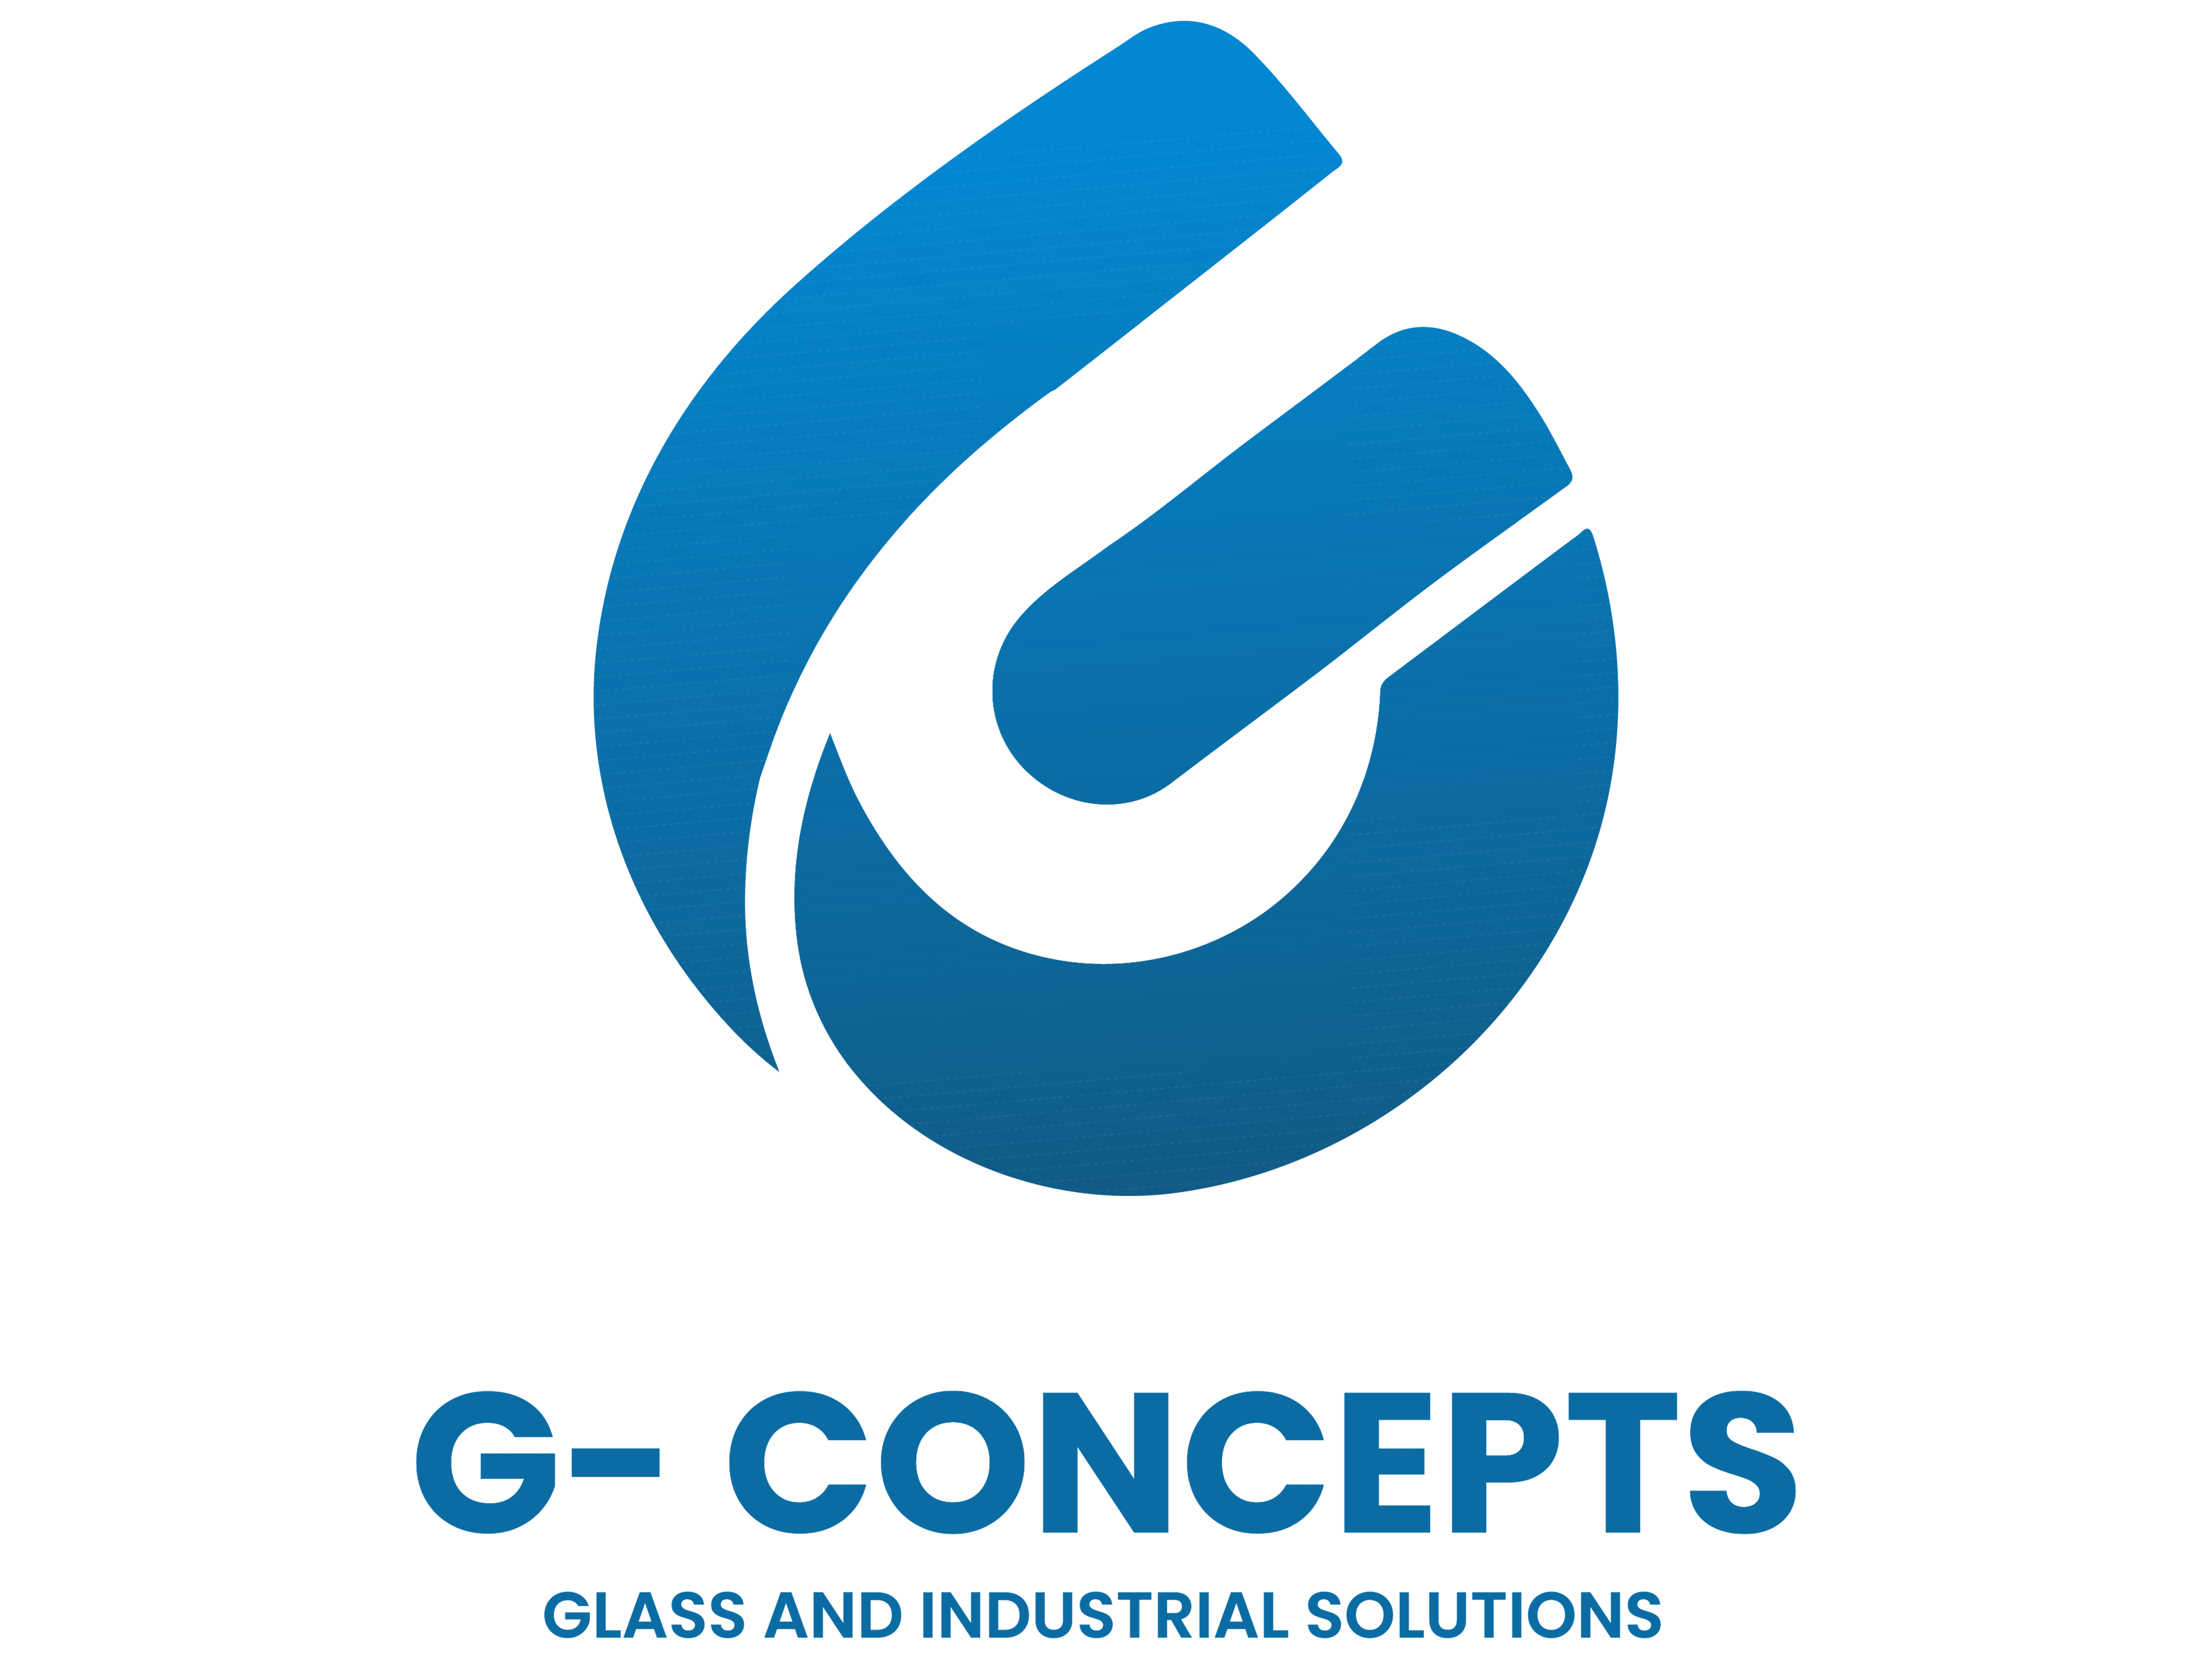 G Concepts|Architect|Professional Services